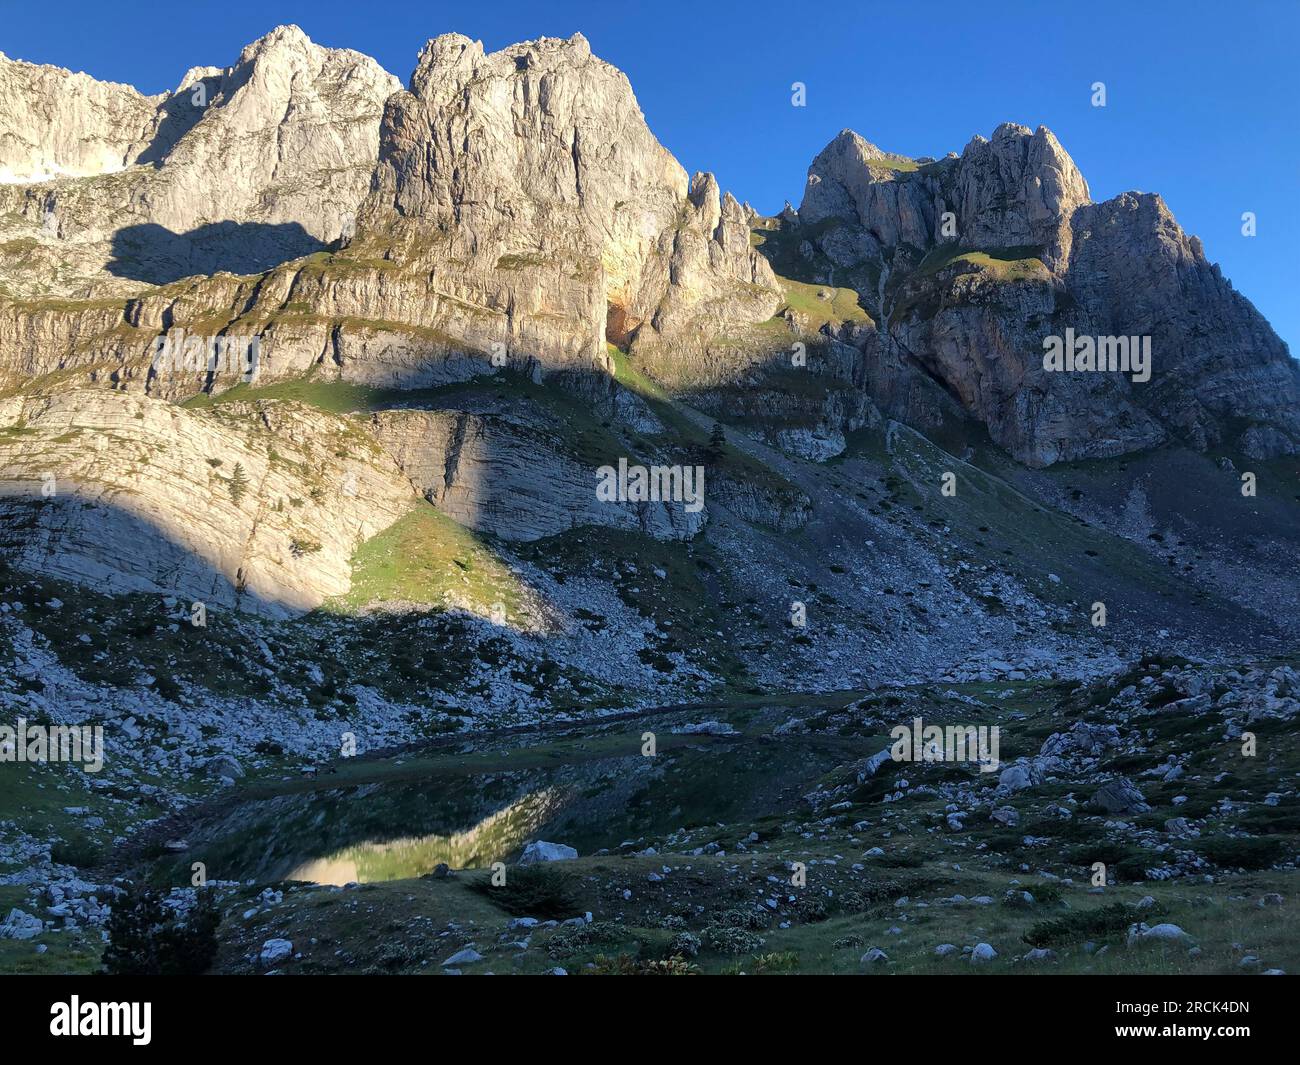 Prokletije mountain, Maja e jezerces peak, Albania Stock Photo